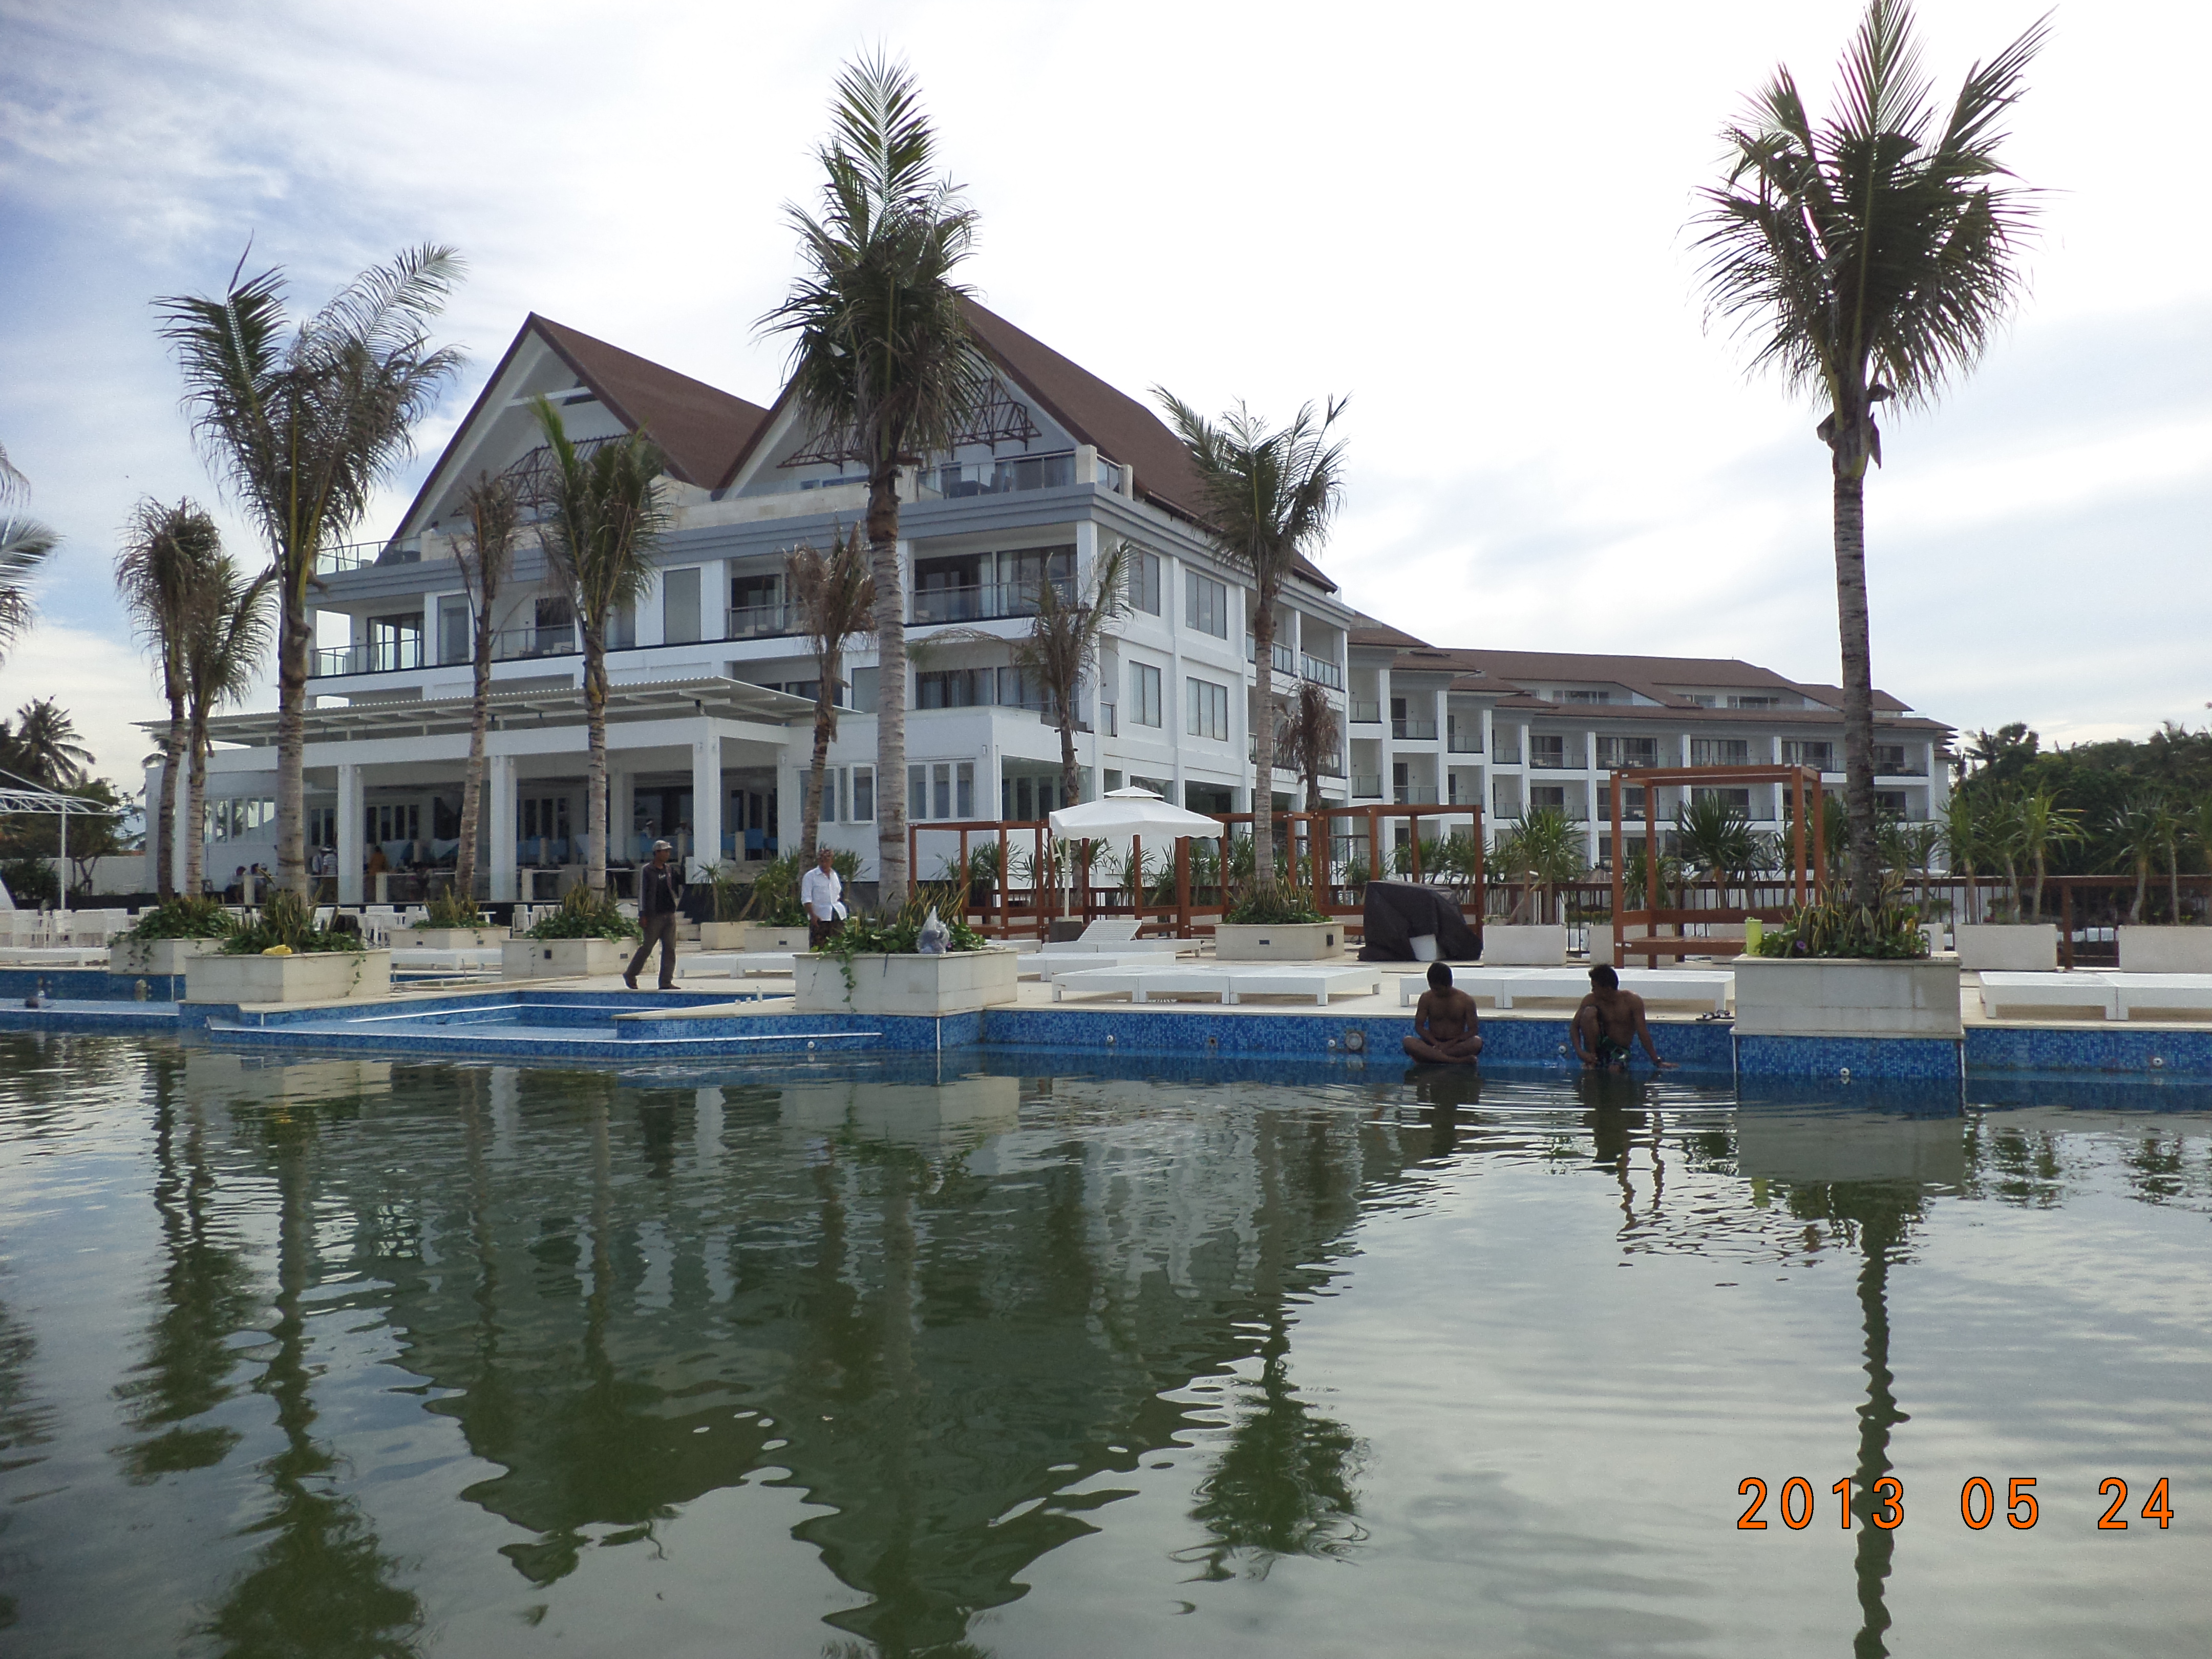 Bali island LV8 Resort Hotel Project